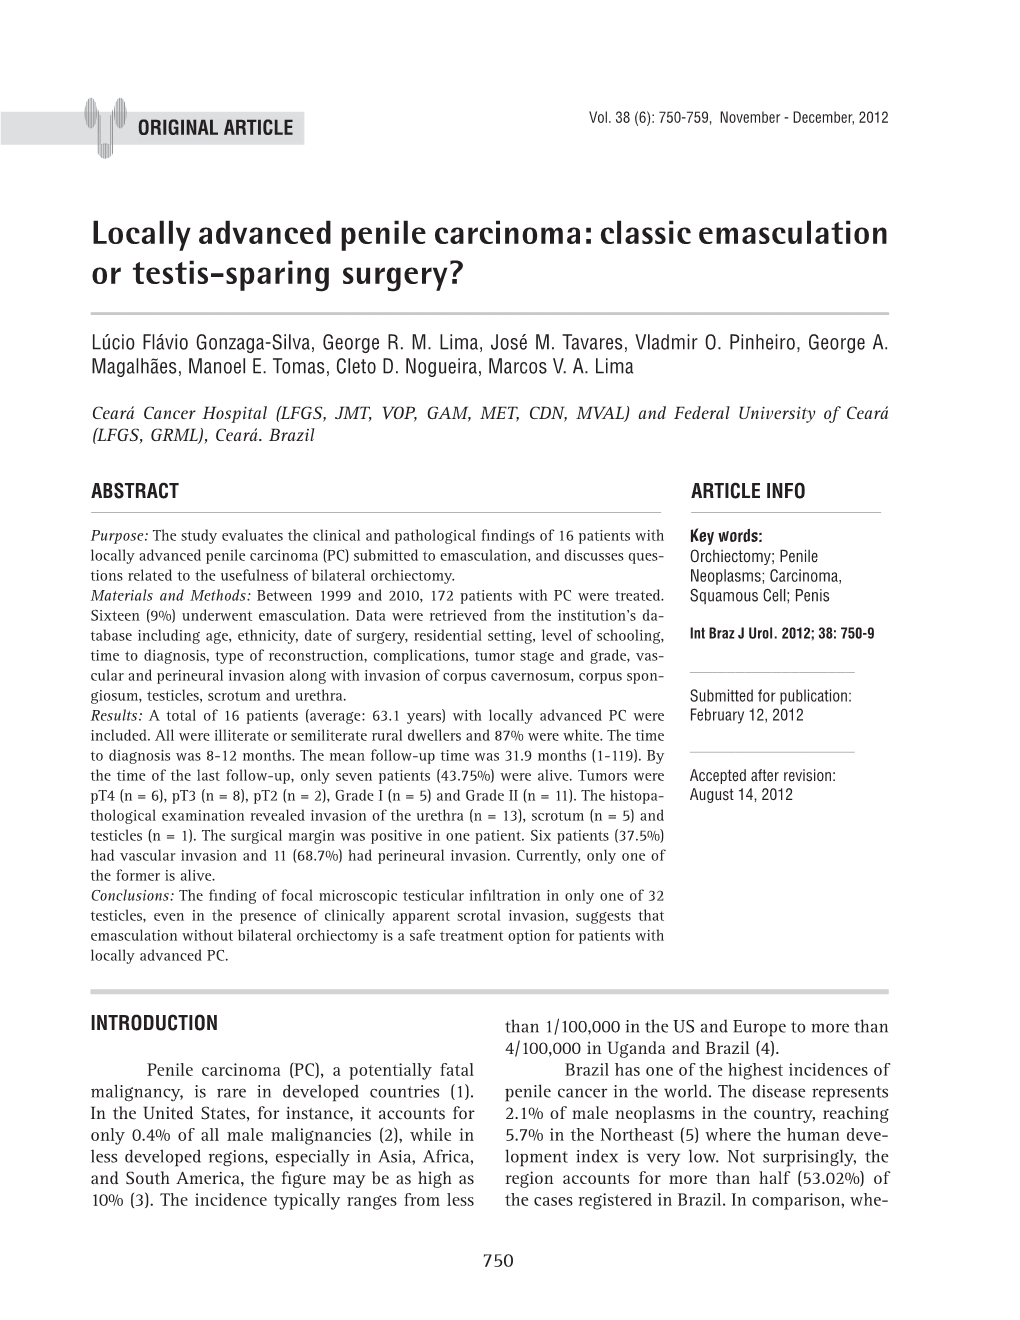 Locally Advanced Penile Carcinoma: Classic Emasculation Or Testis-Sparing Surgery? ______Lúcio Flávio Gonzaga-Silva, George R